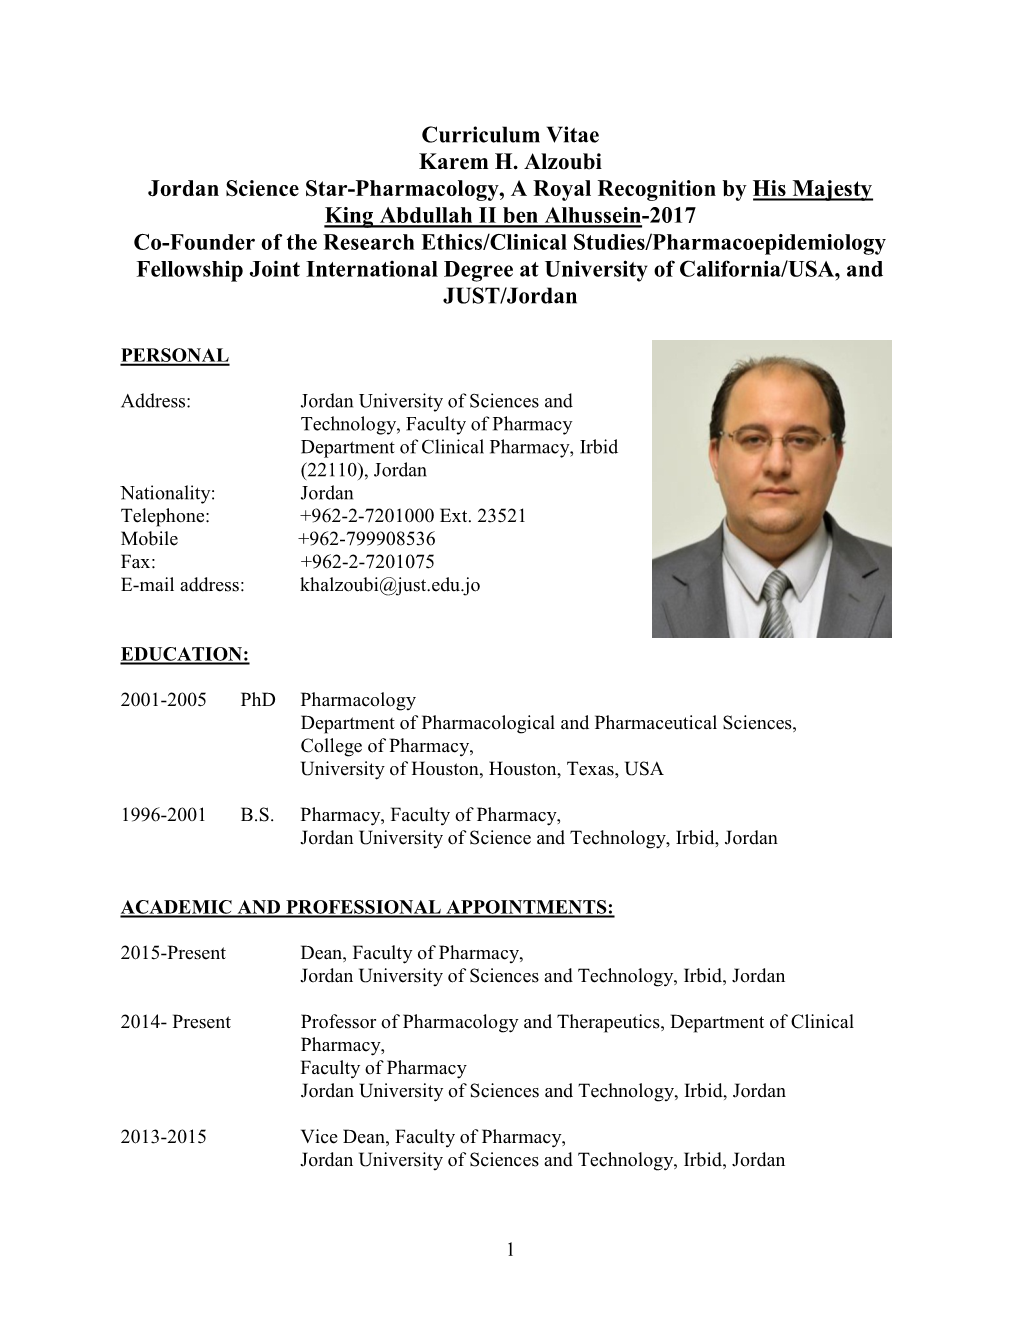 Curriculum Vitae Karem H. Alzoubi Jordan Science Star-Pharmacology